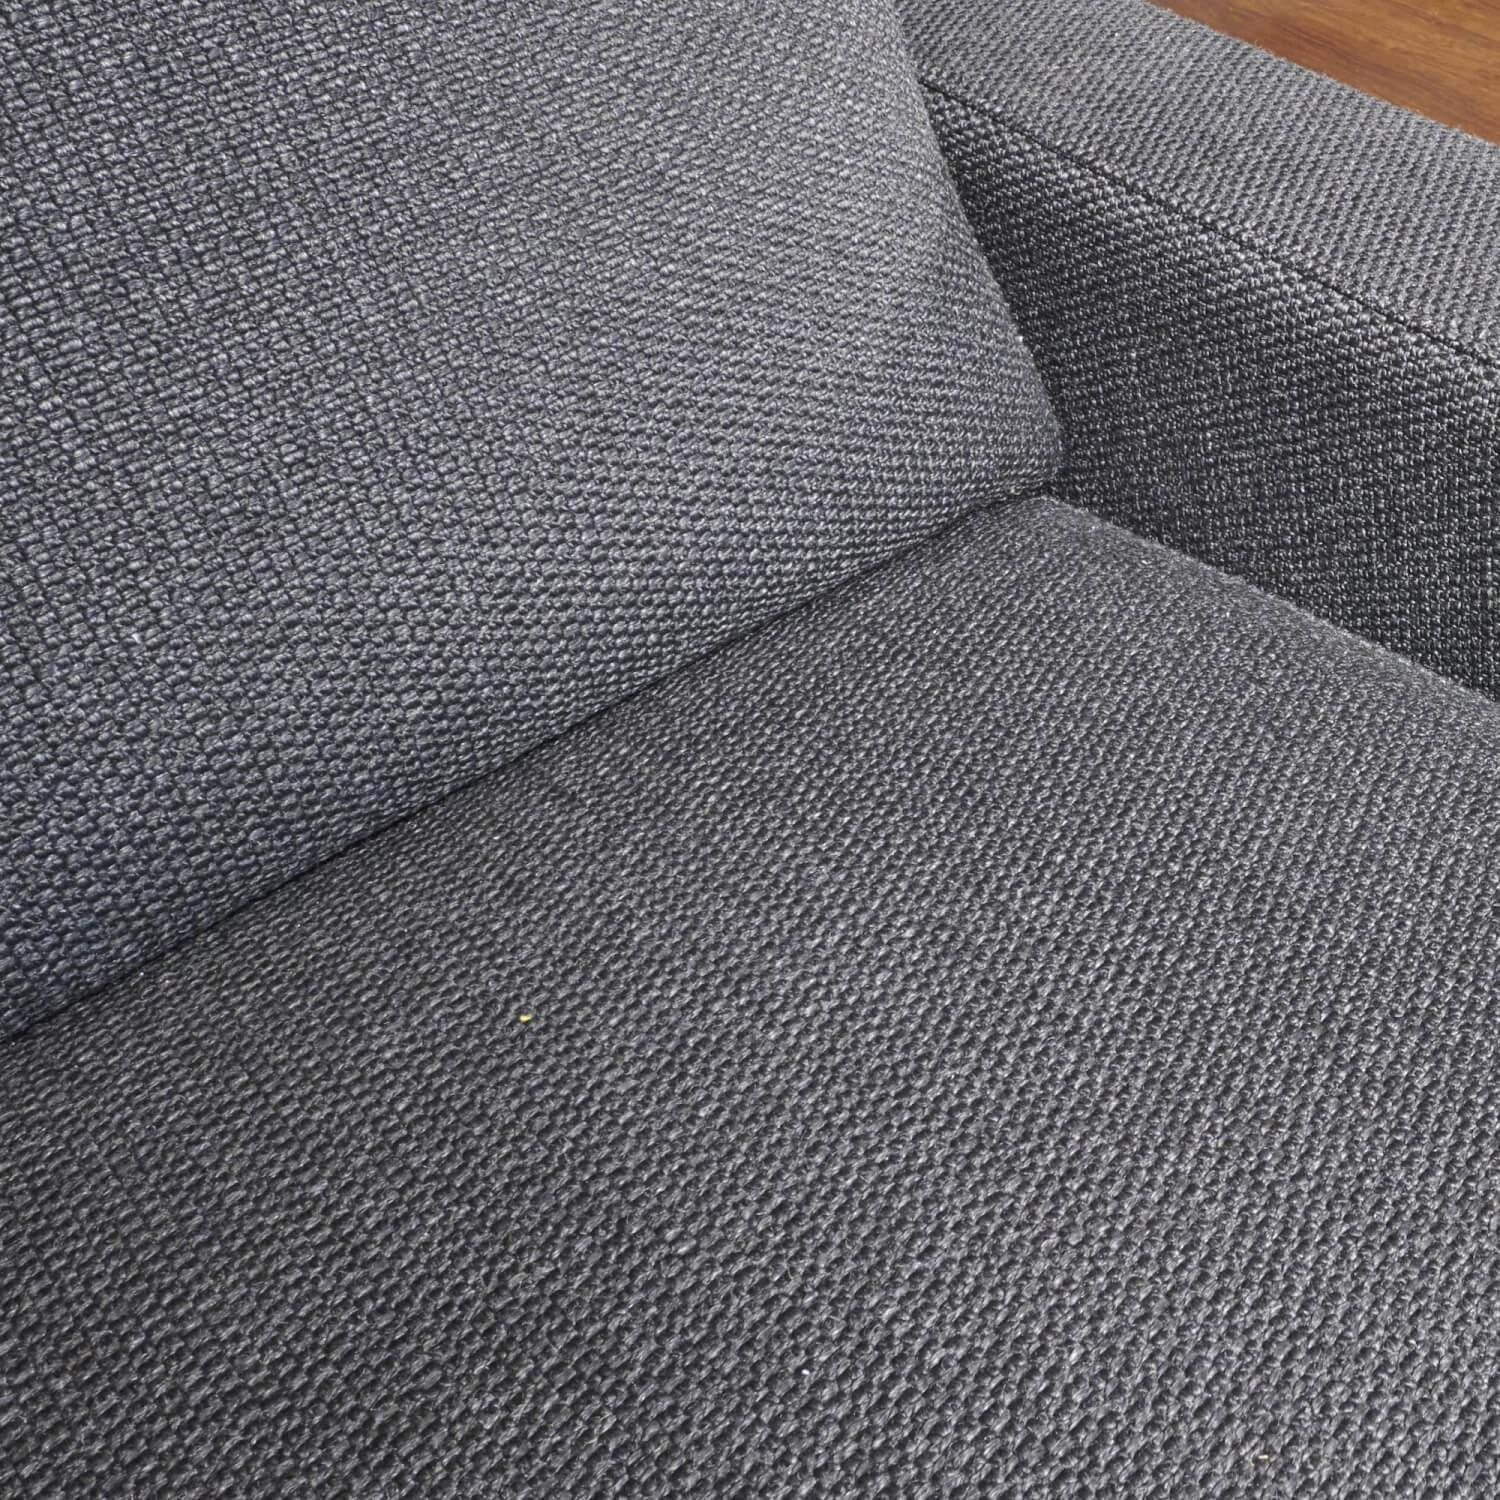 Sofa Conseta Stoff 5010 Anthrazit Schmalfuß Metall Verchromt